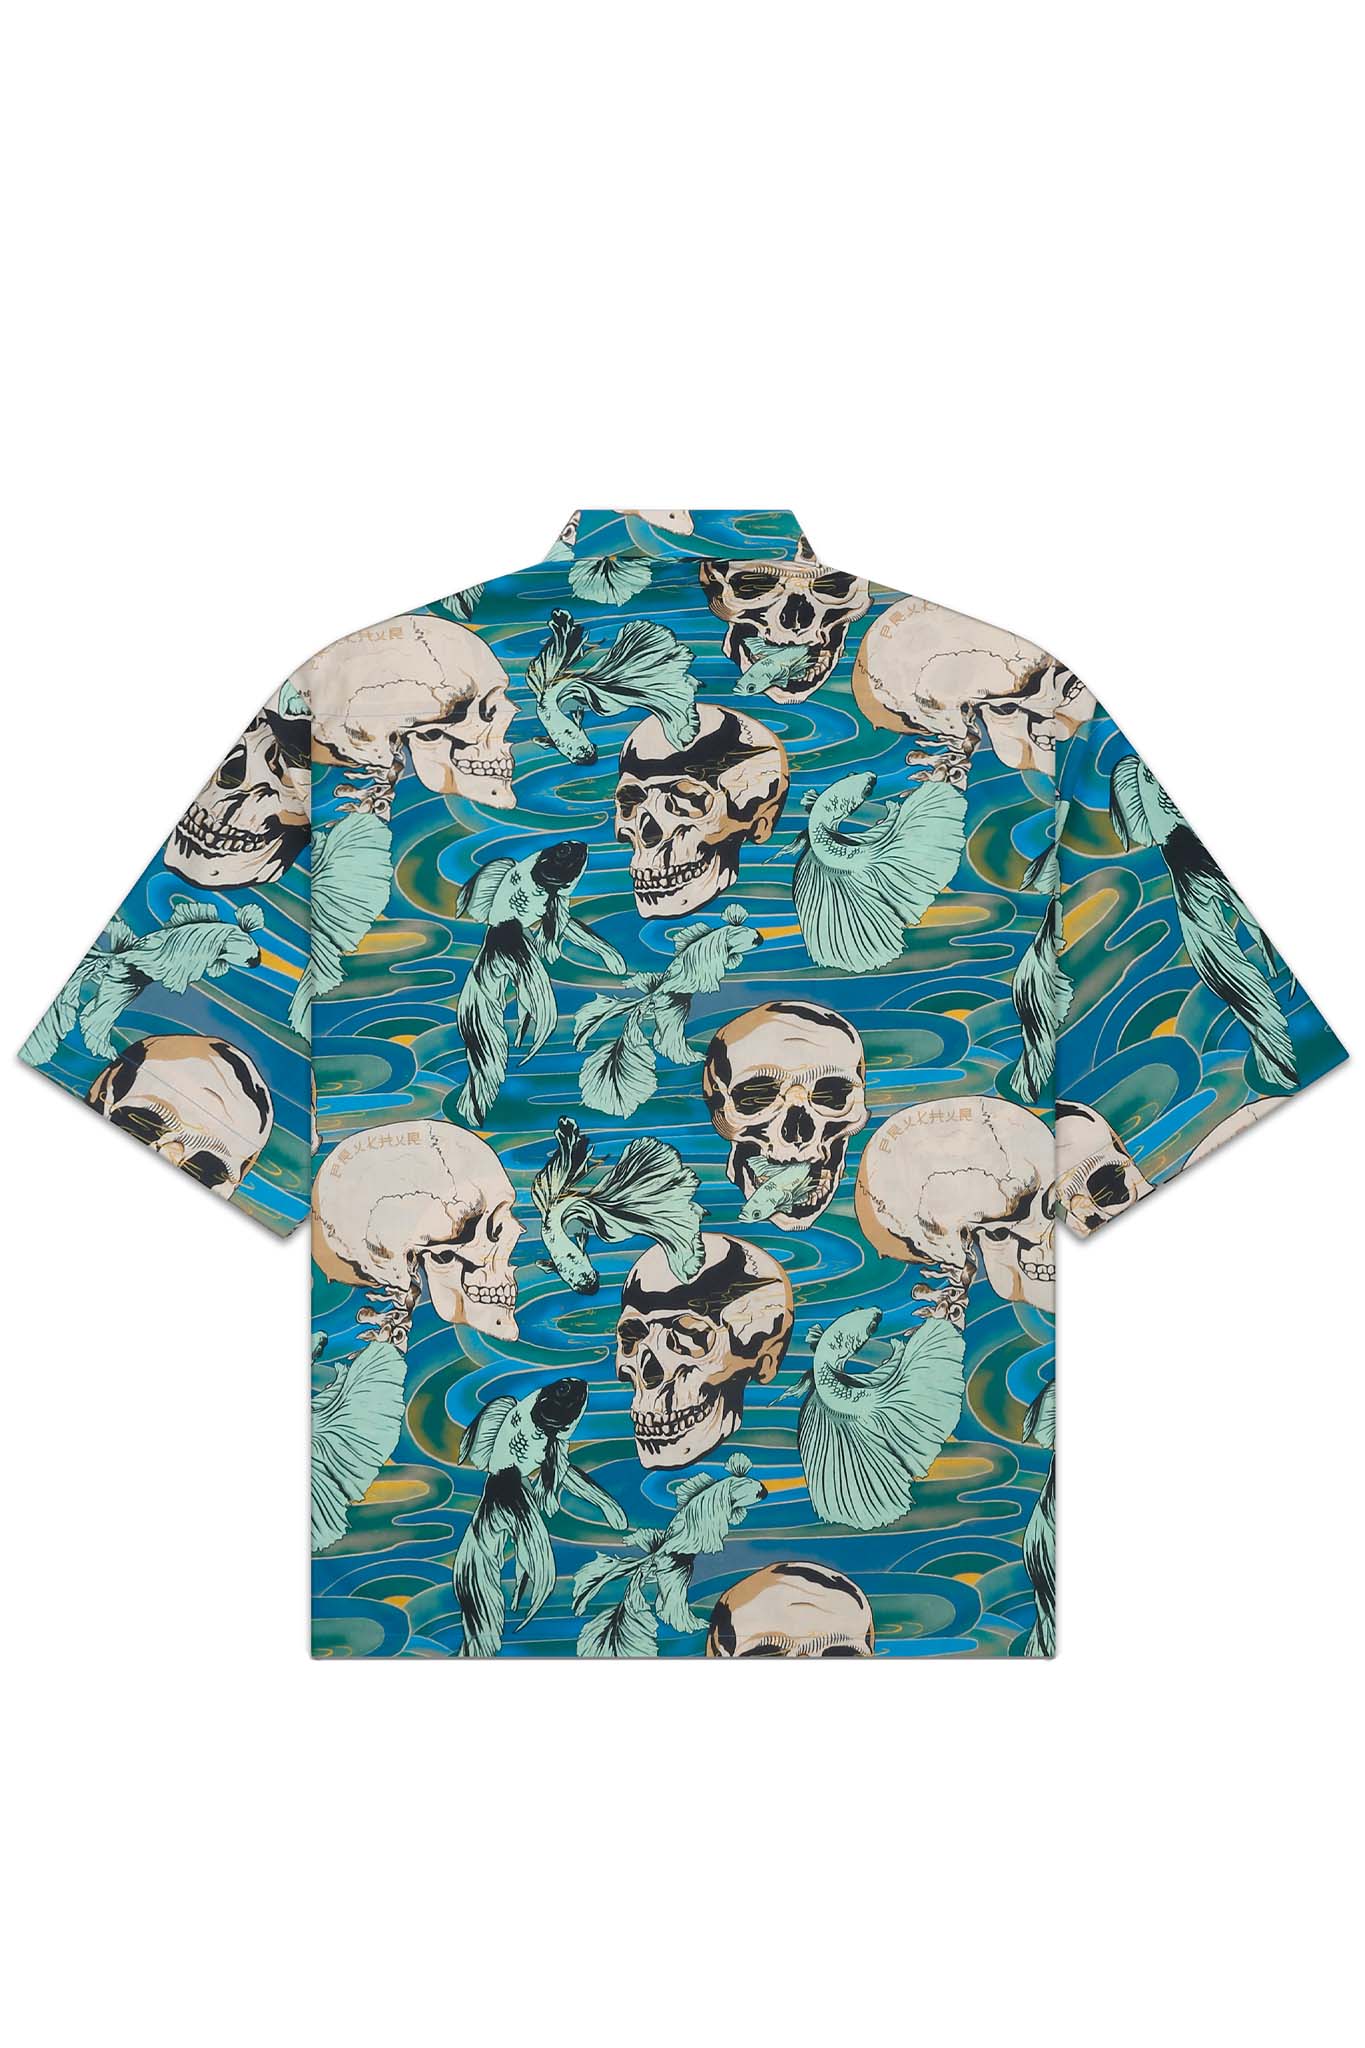 Siamese Fishes Shirt